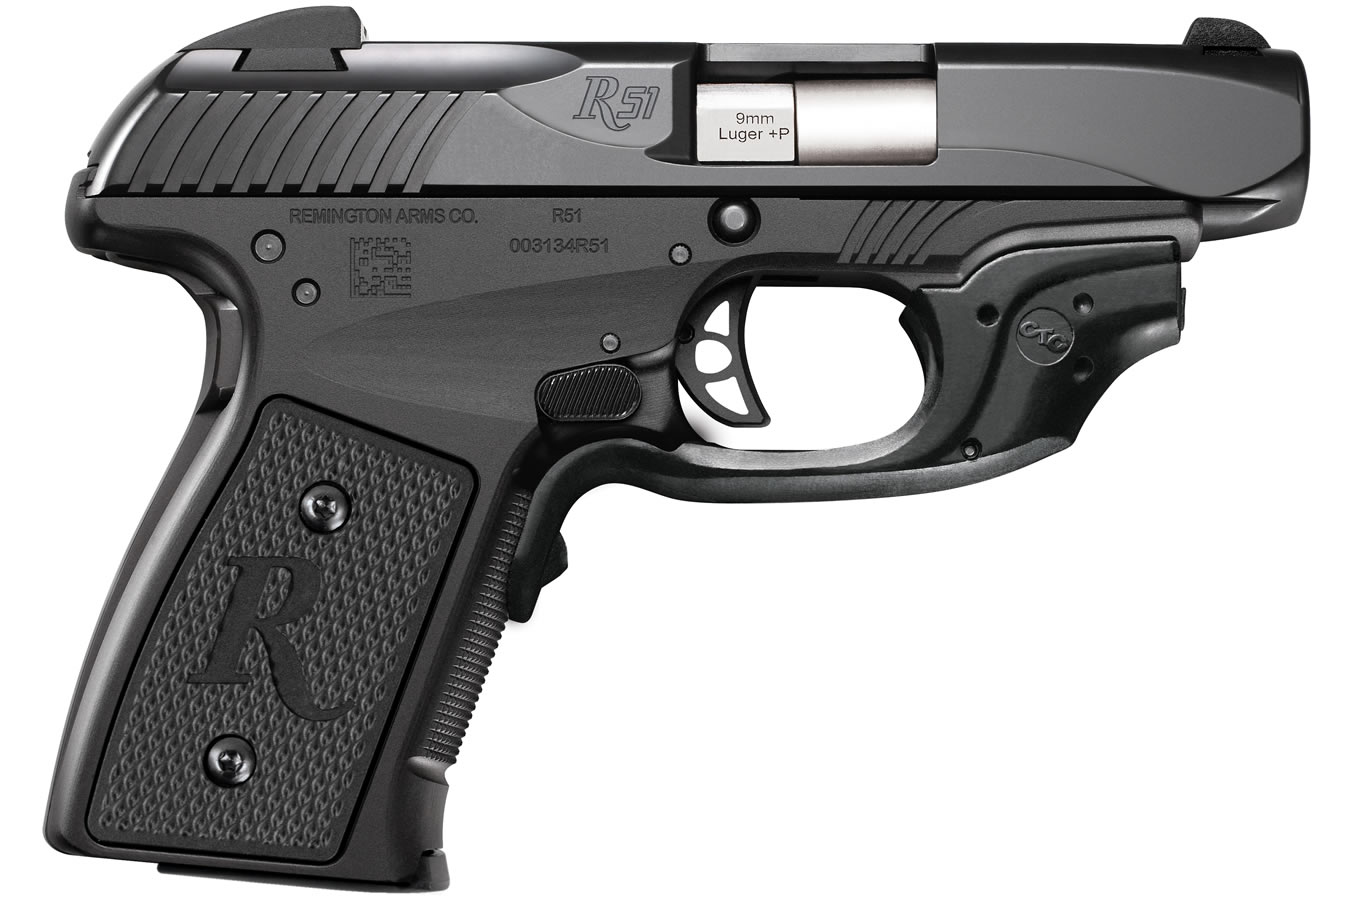 remington-r51-subcompact-9mm-luger-centerfire-pistol-with-crimson-trace